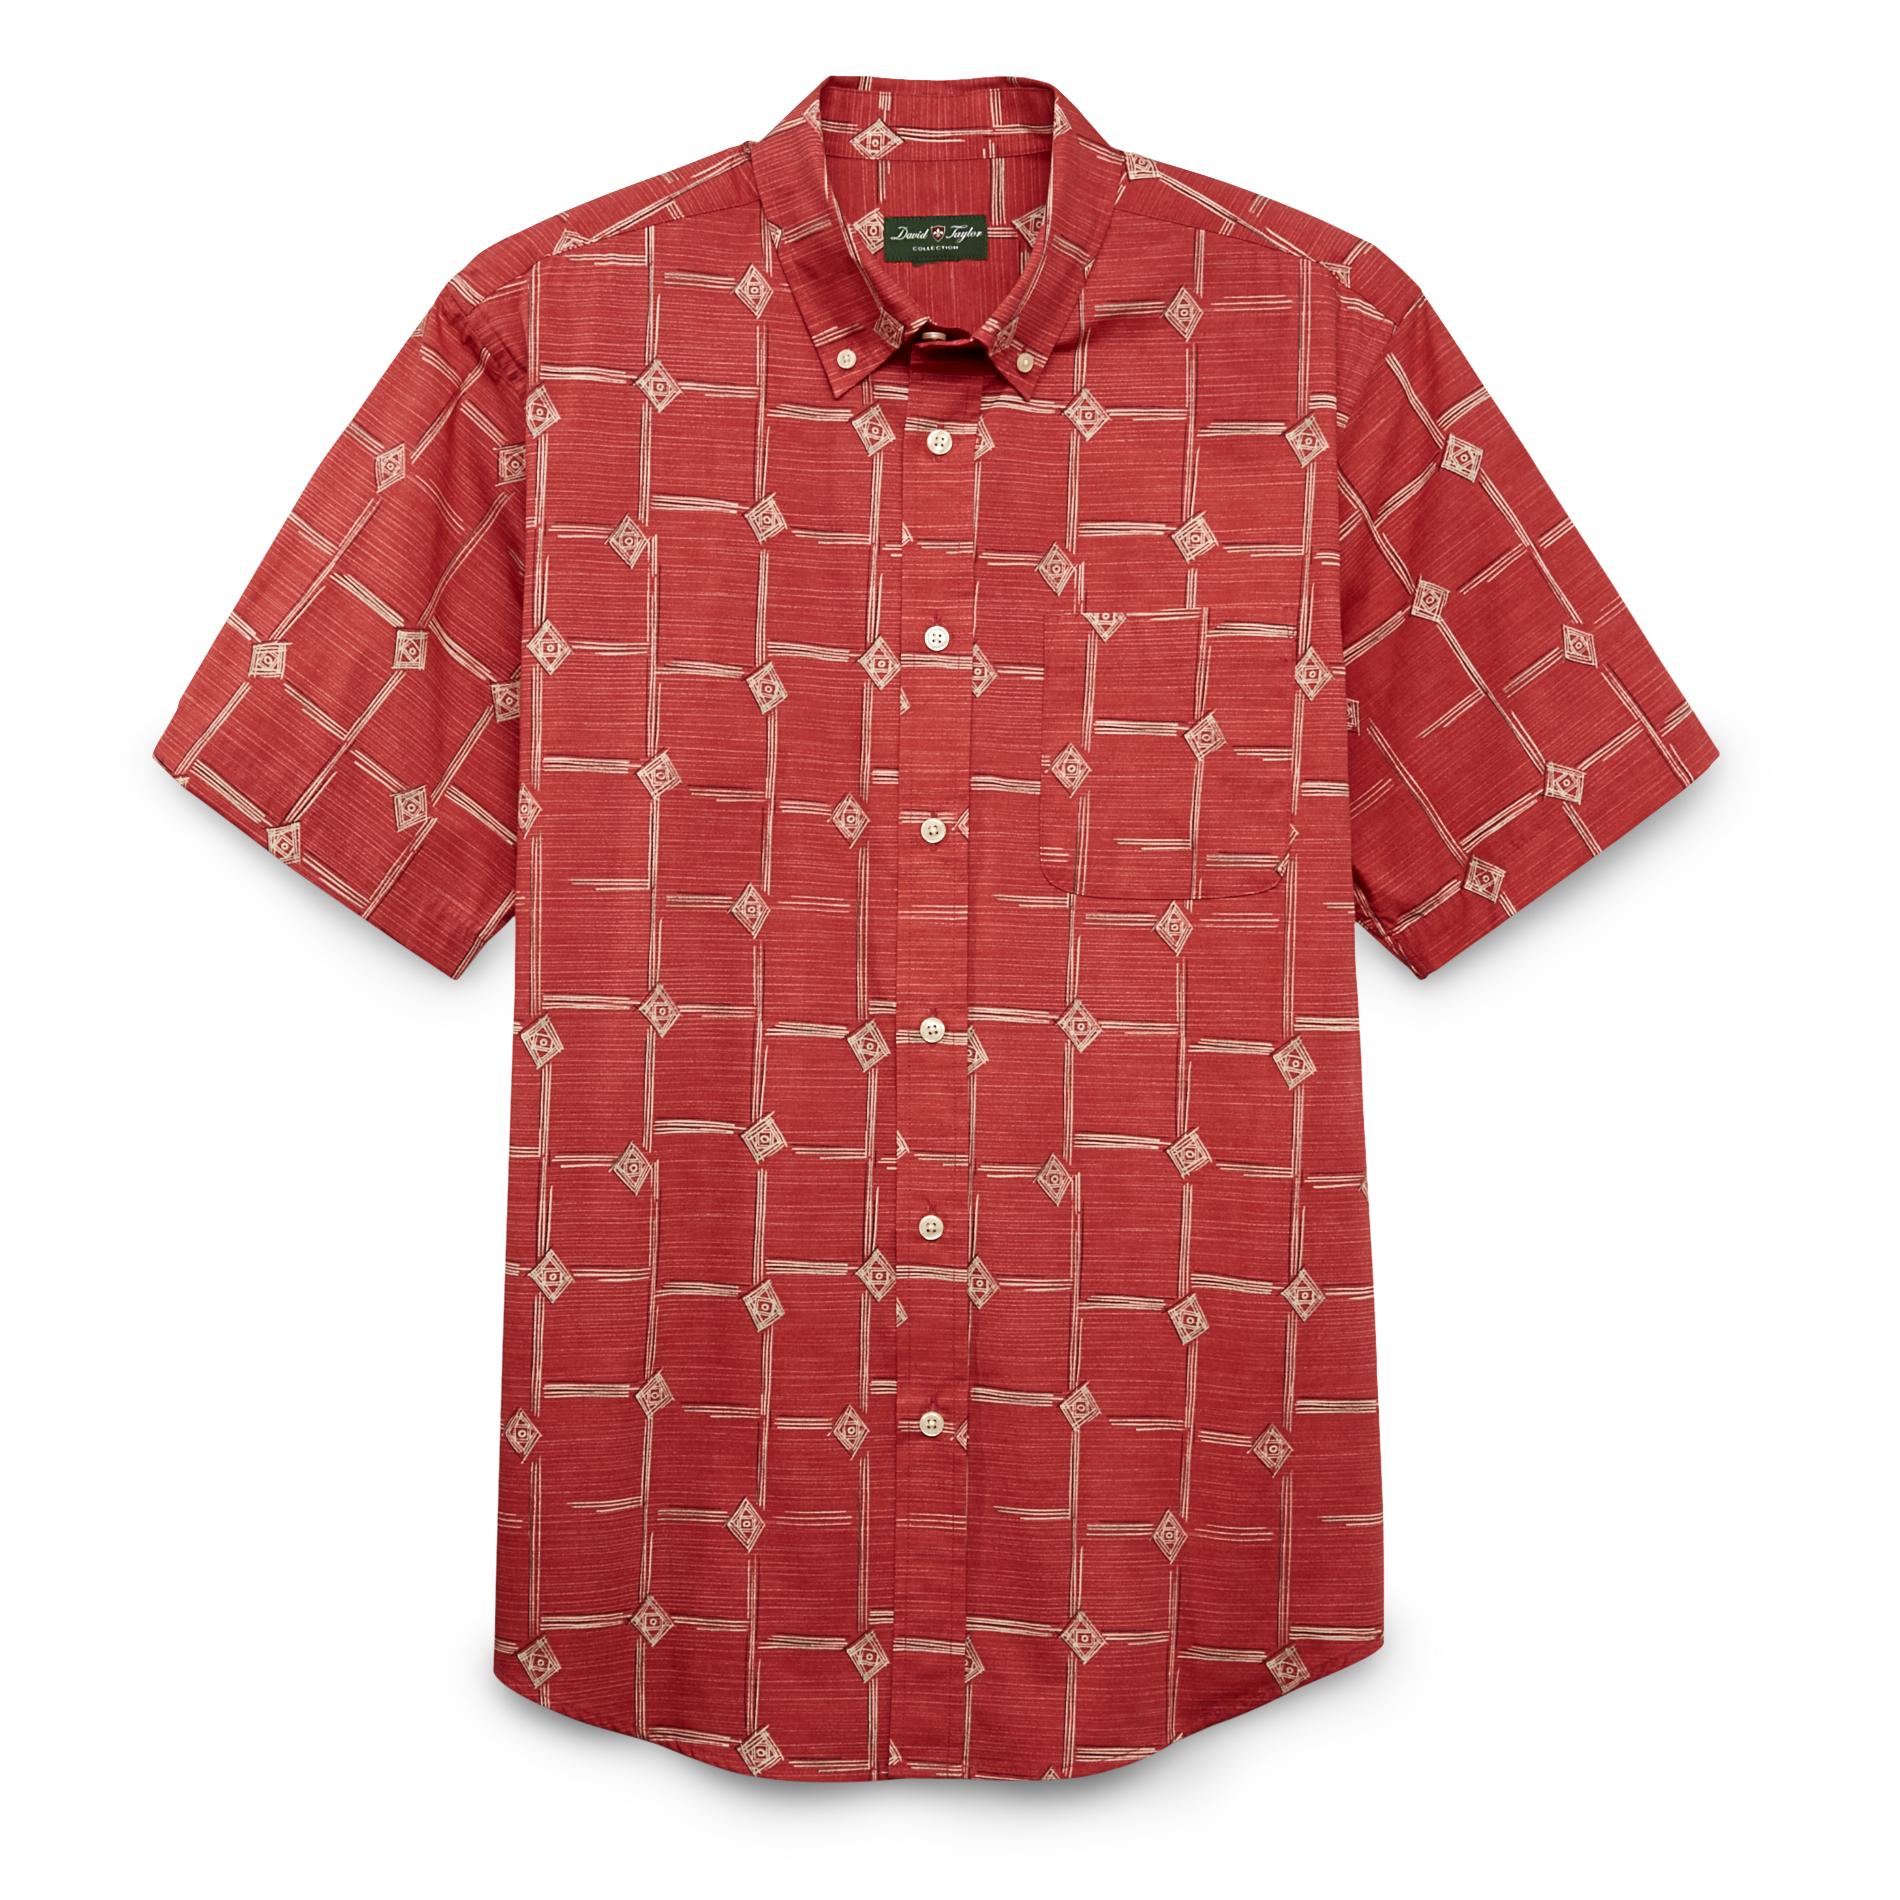 David Taylor Collection Men's Short-Sleeve Button-Front Shirt - Tribal Windowpane